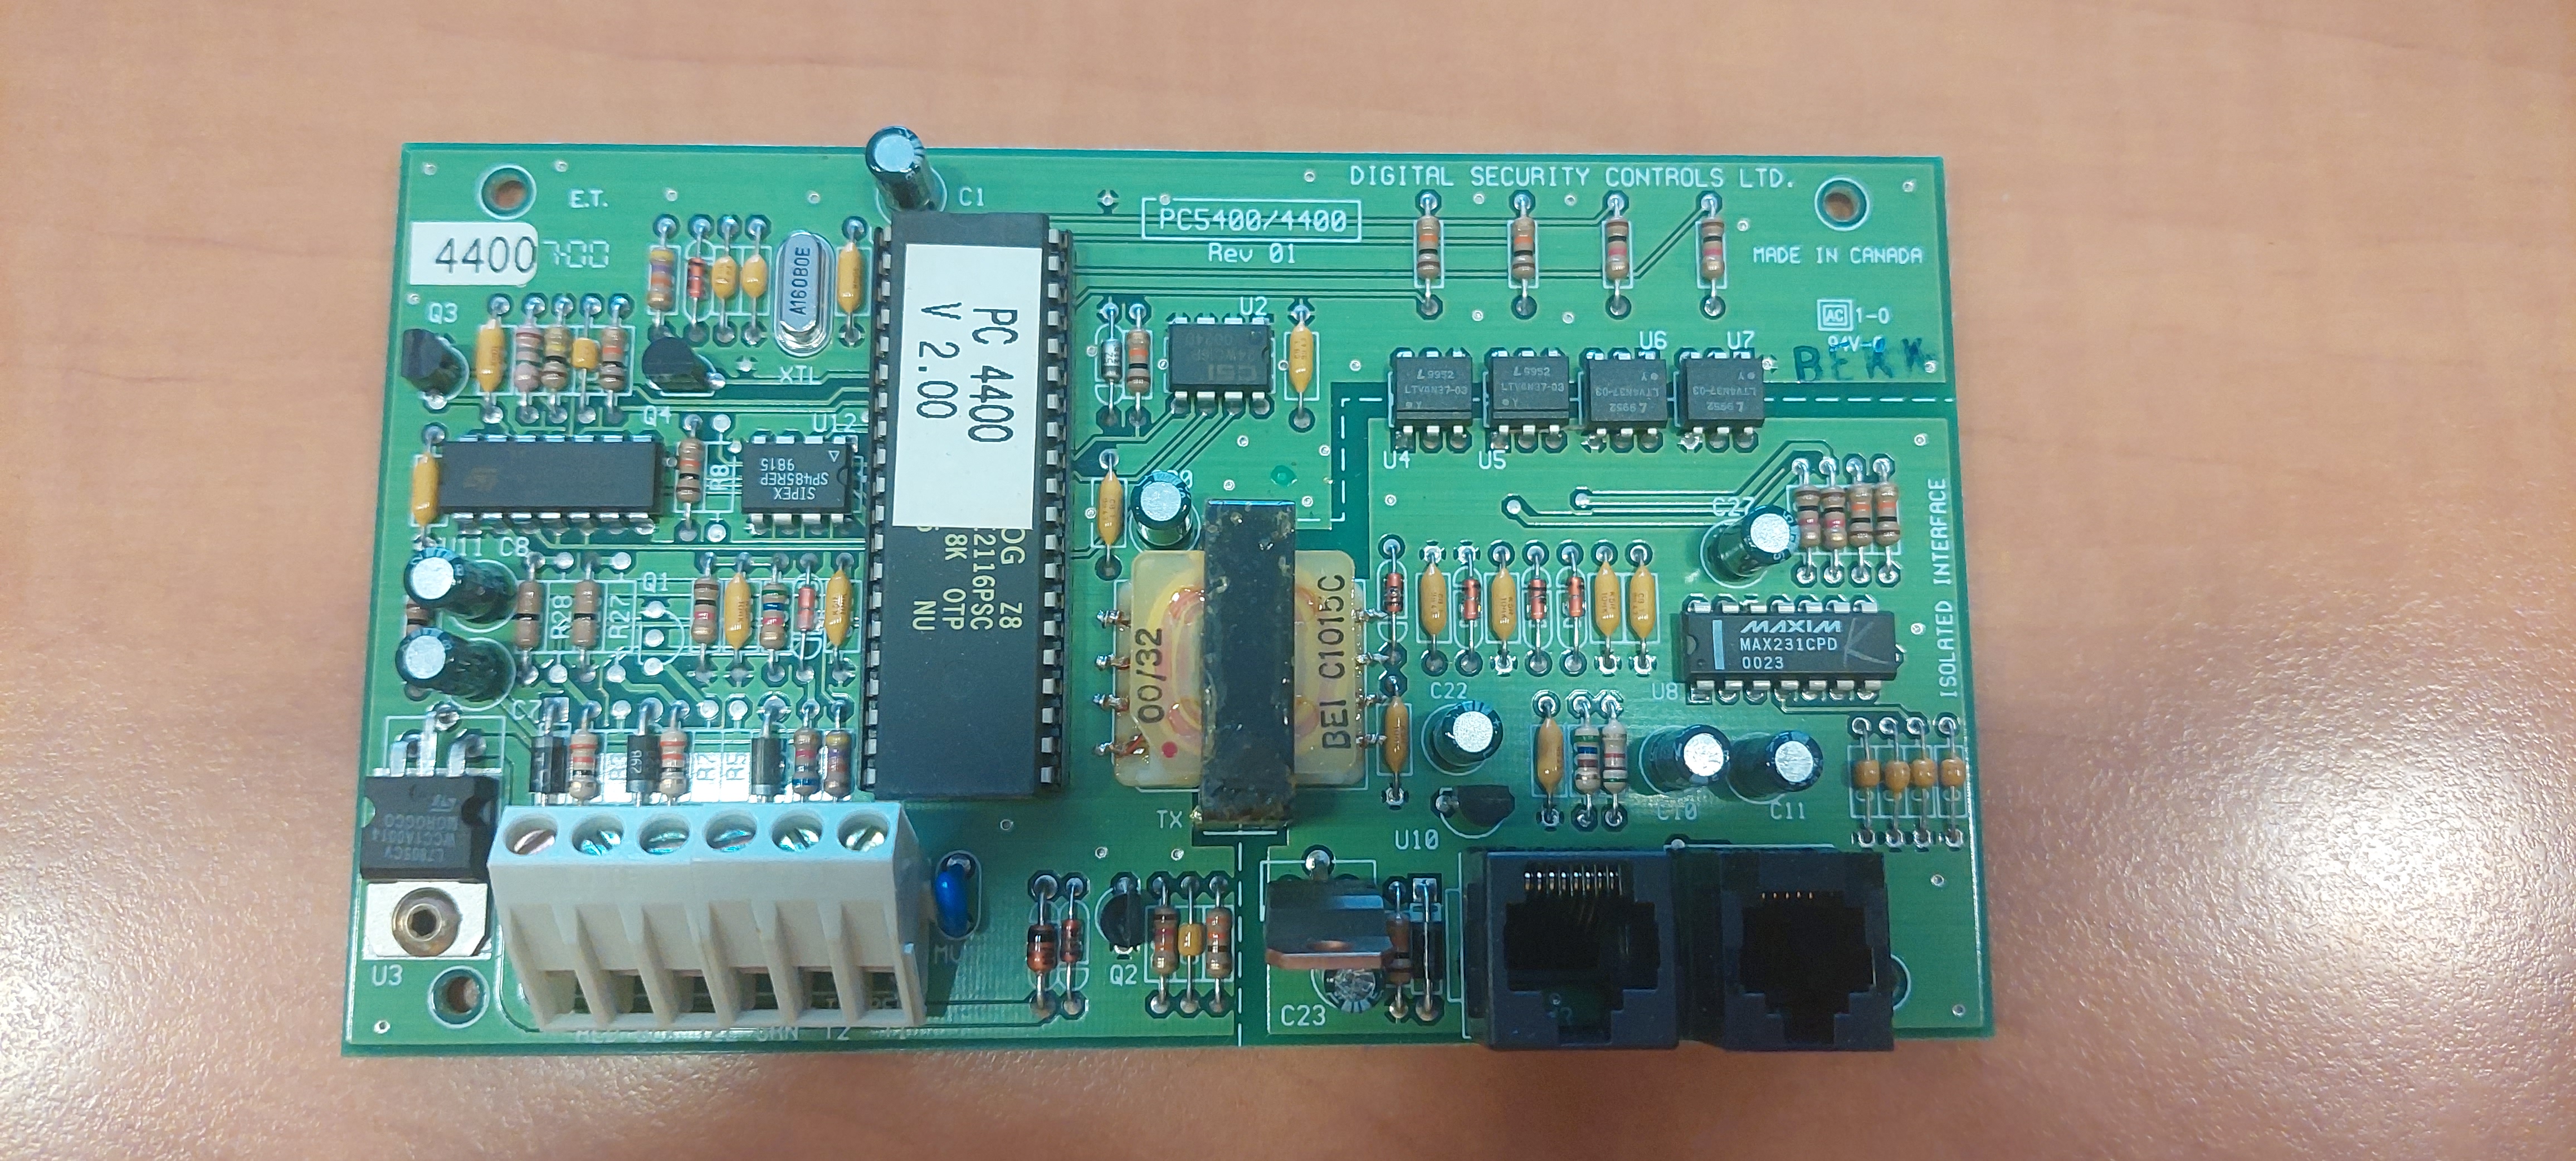 DSC-PC4400 / nyomtató modul